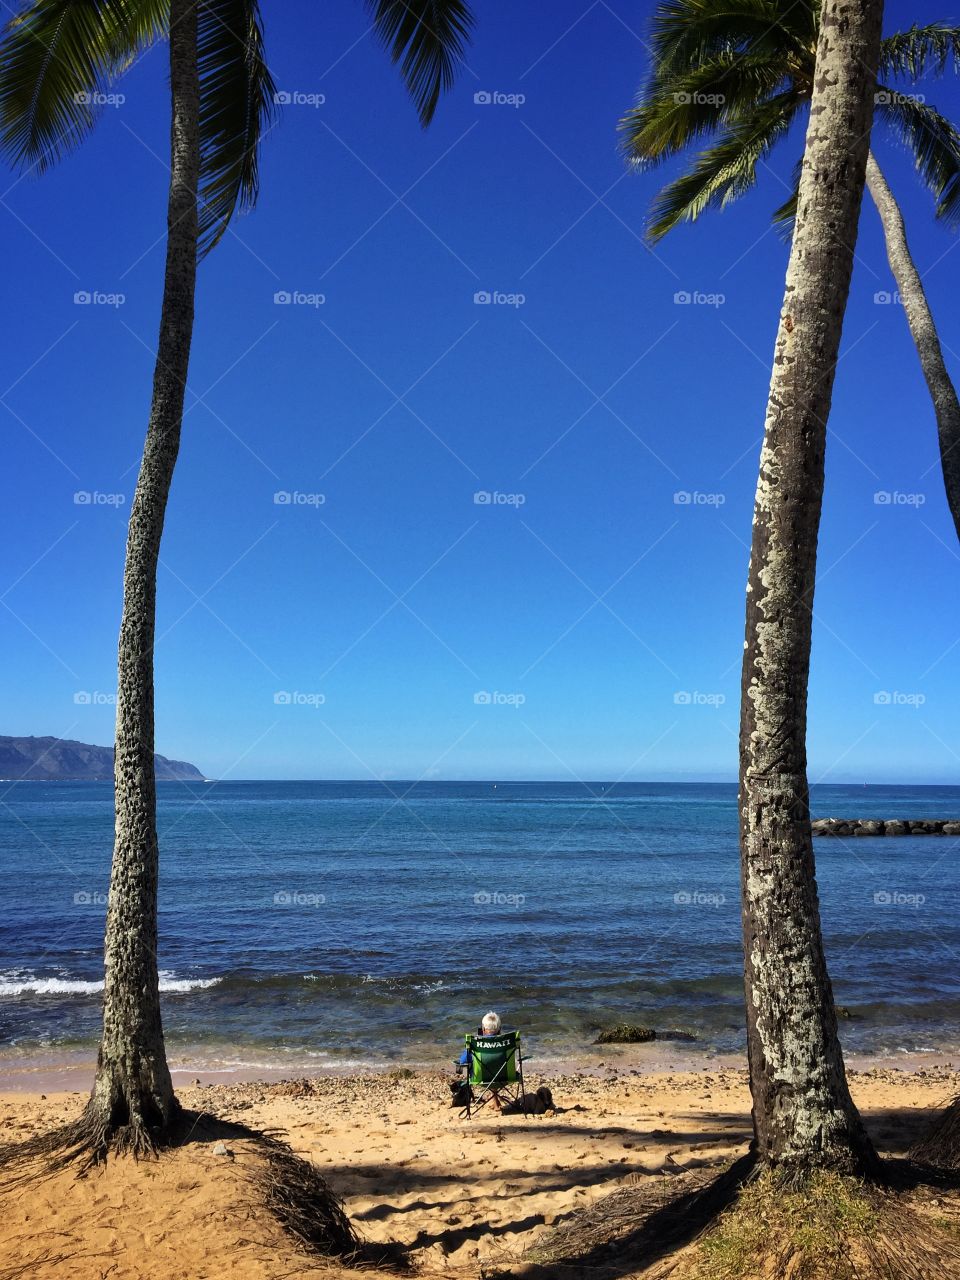 Hawaii chair